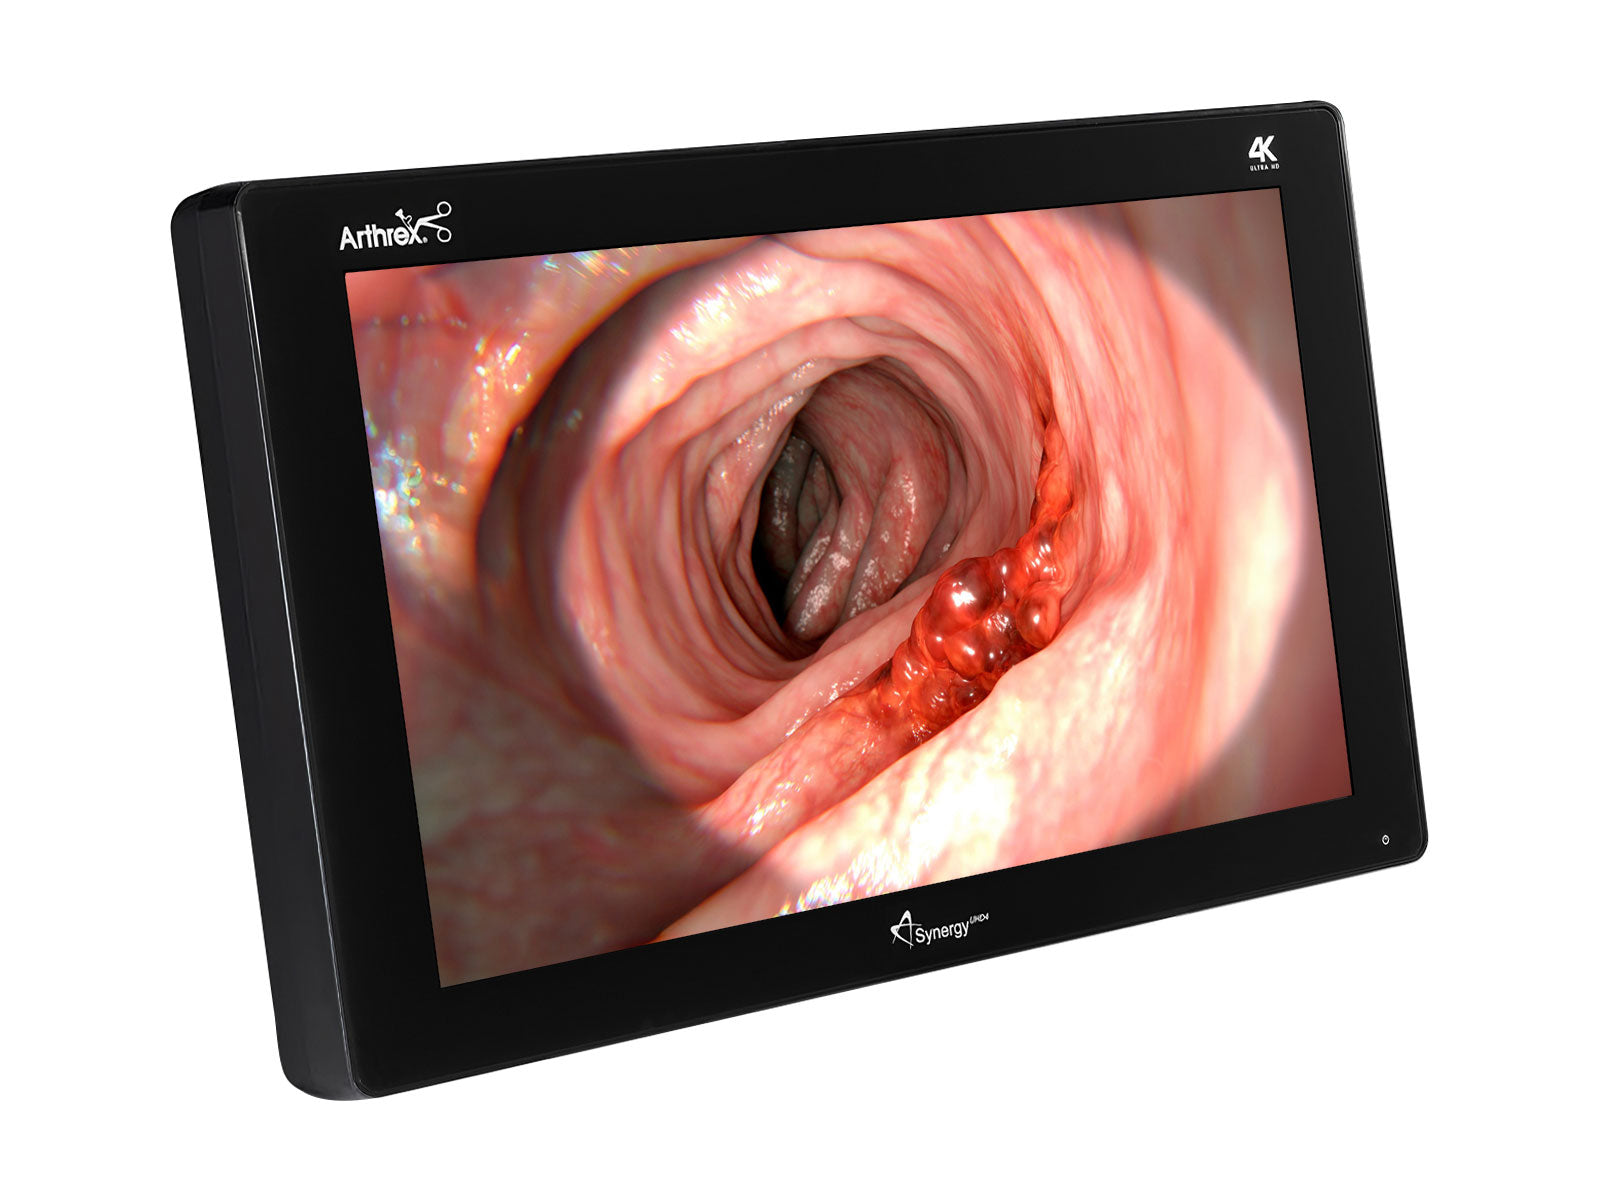 Barco Arthrex SynergyUHD4 32" 4K Color Surgical Medical Display Monitor (AR-3250-3210) Monitors.com 